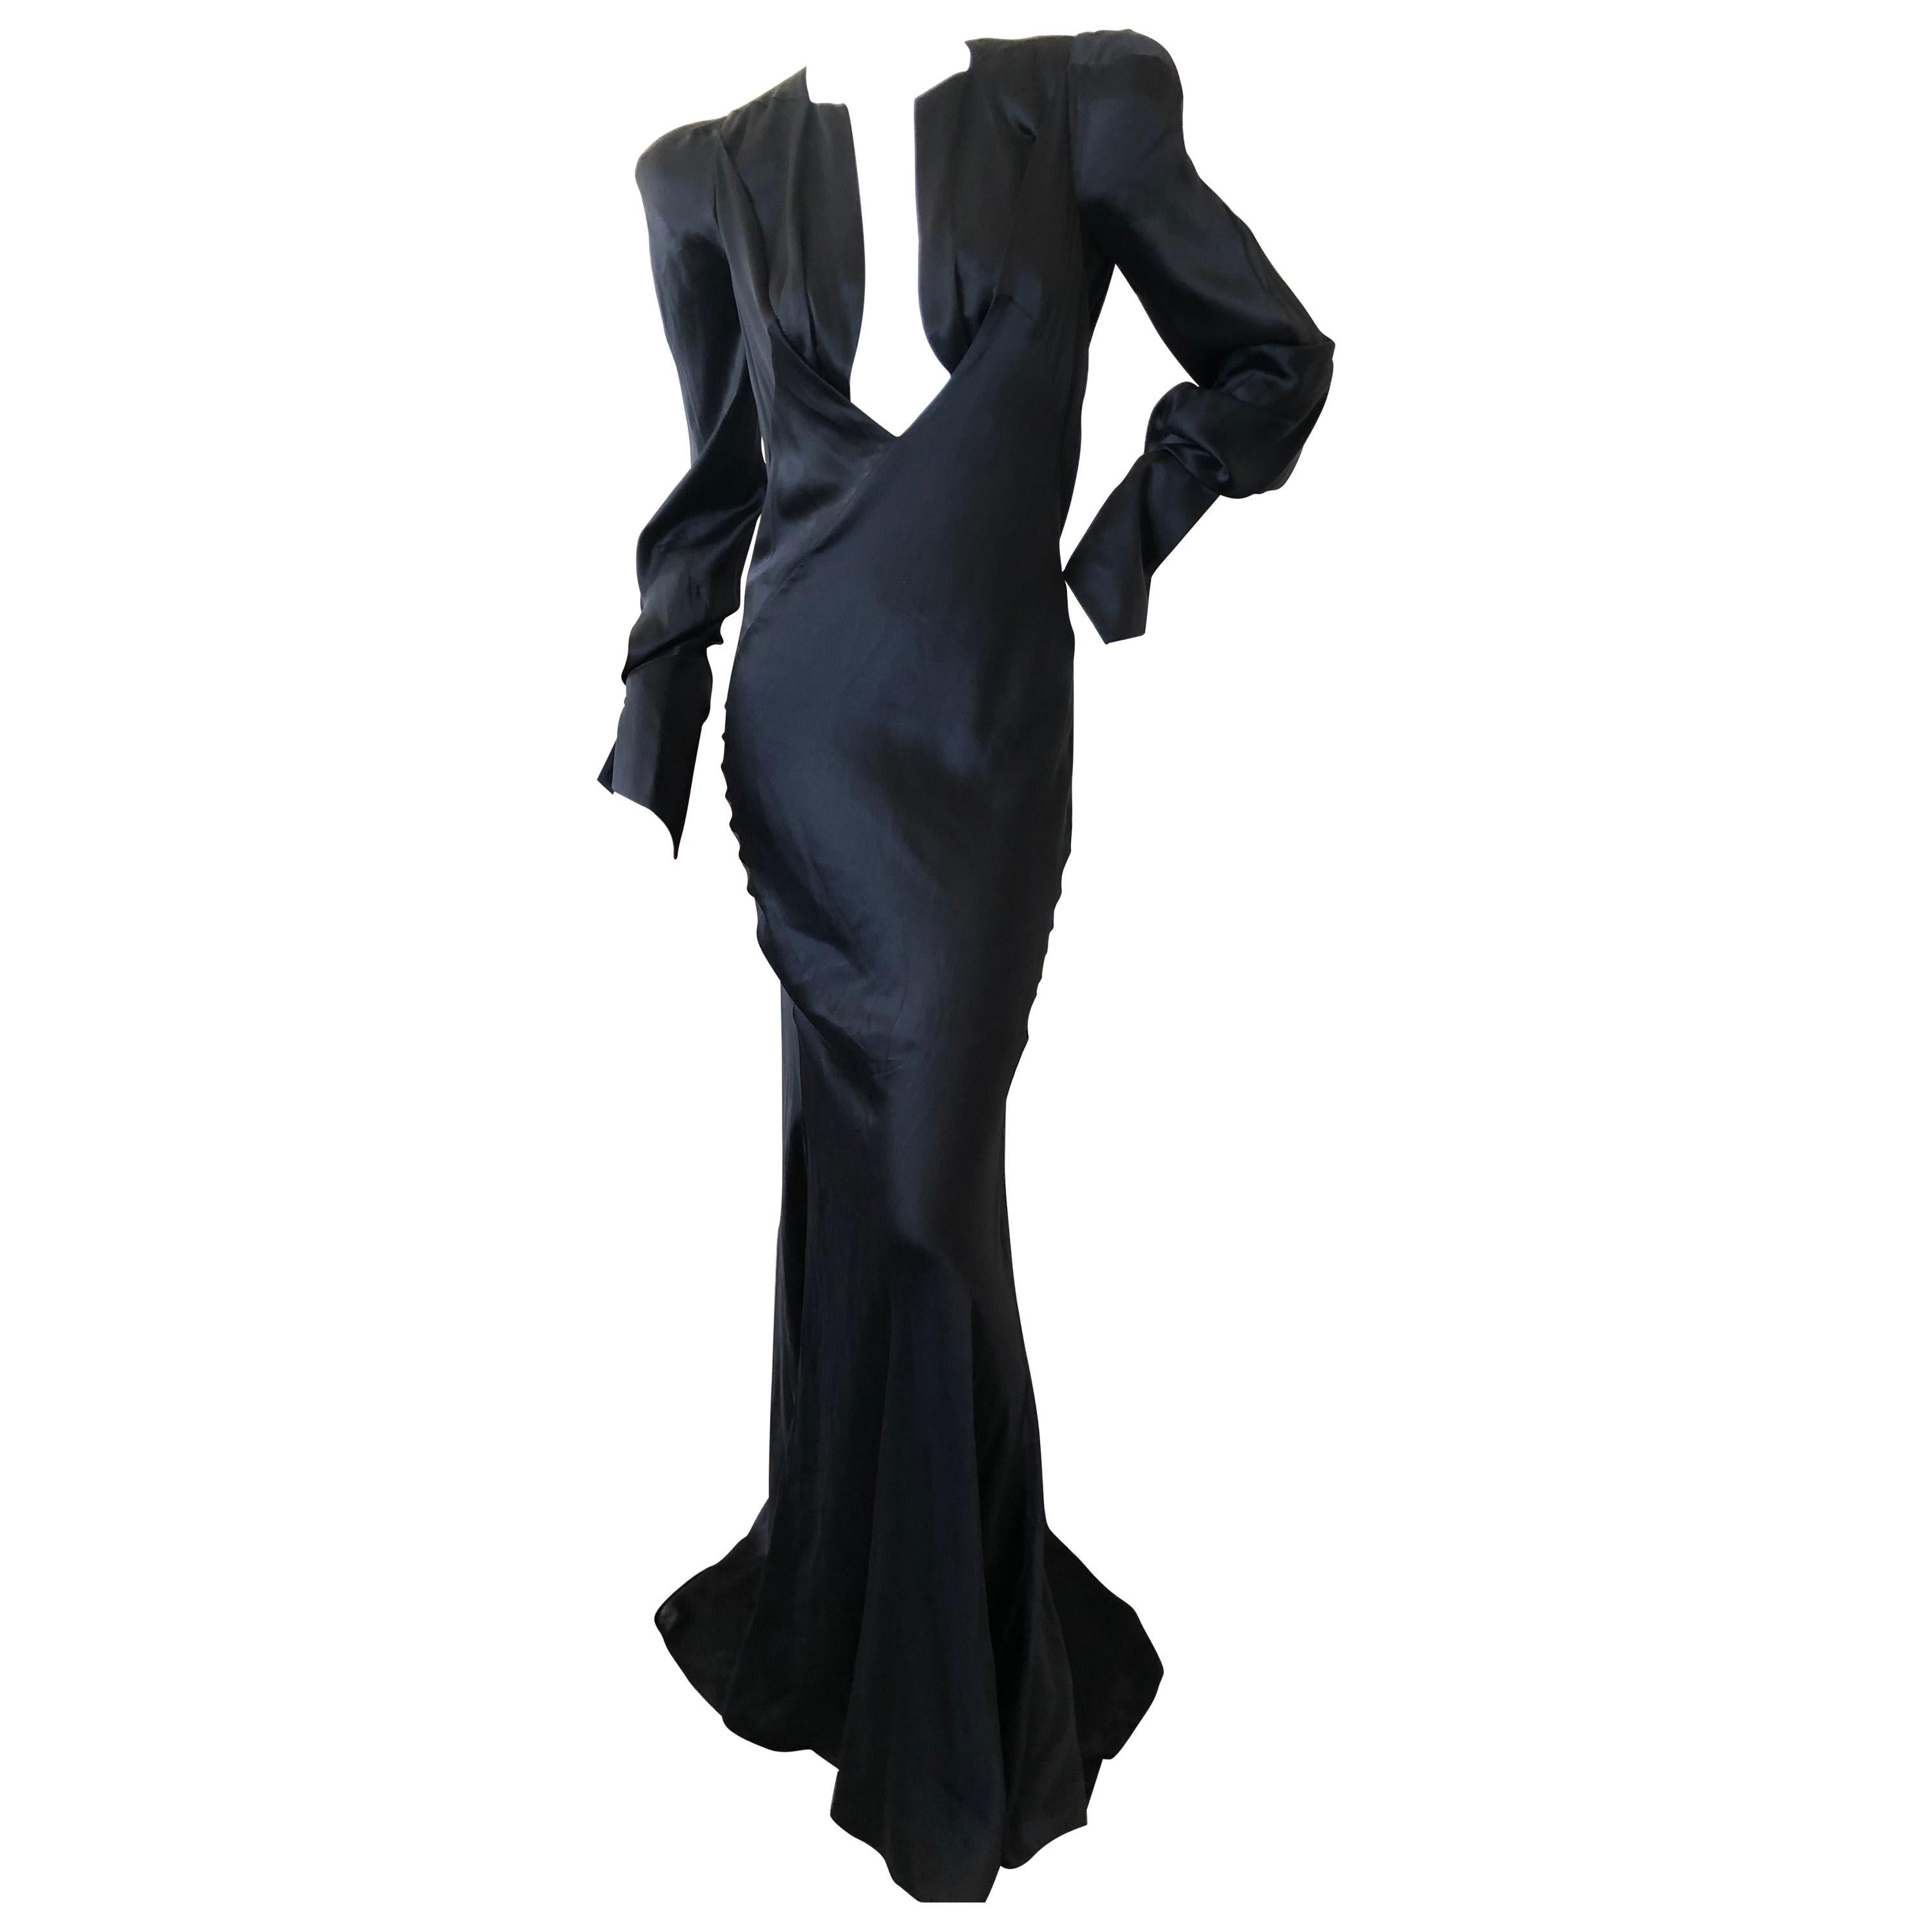 Olivier Theyskins Bias Cut Black Silk Plunging Evening Dress with Bold Shoulders For Sale